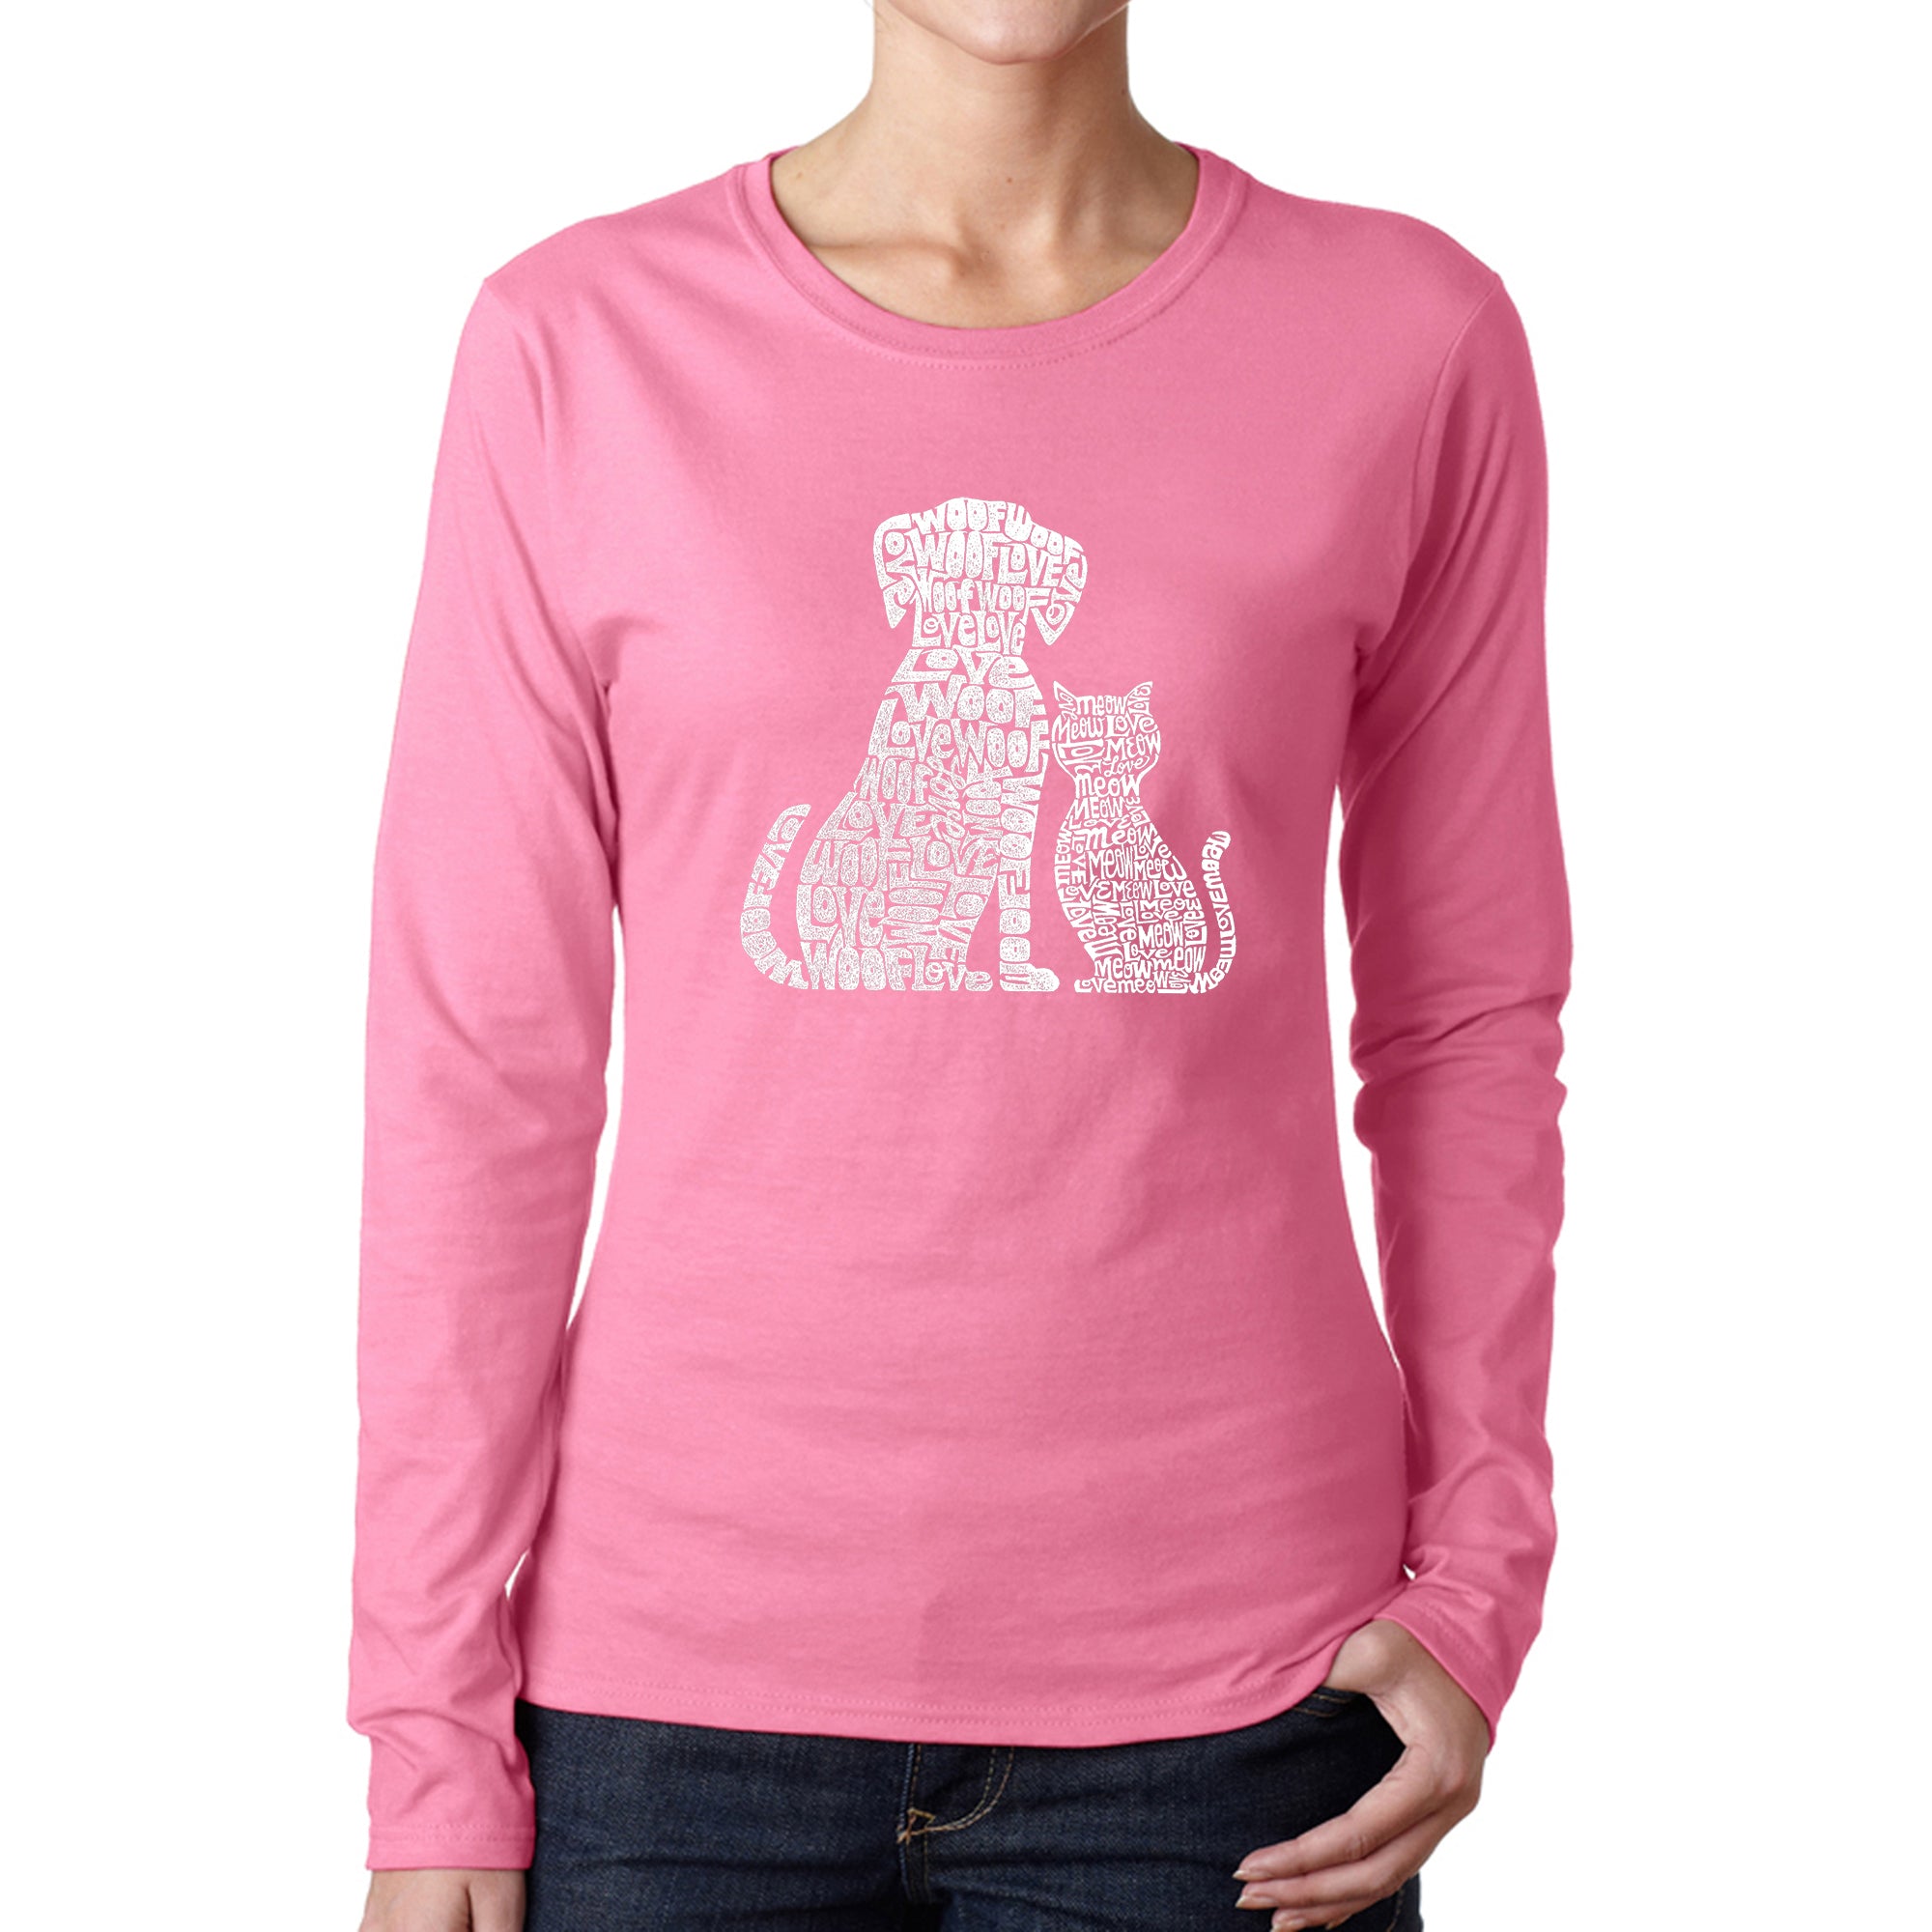 Dogs And Cats - Women's Word Art Long Sleeve T-Shirt - Pink - Medium